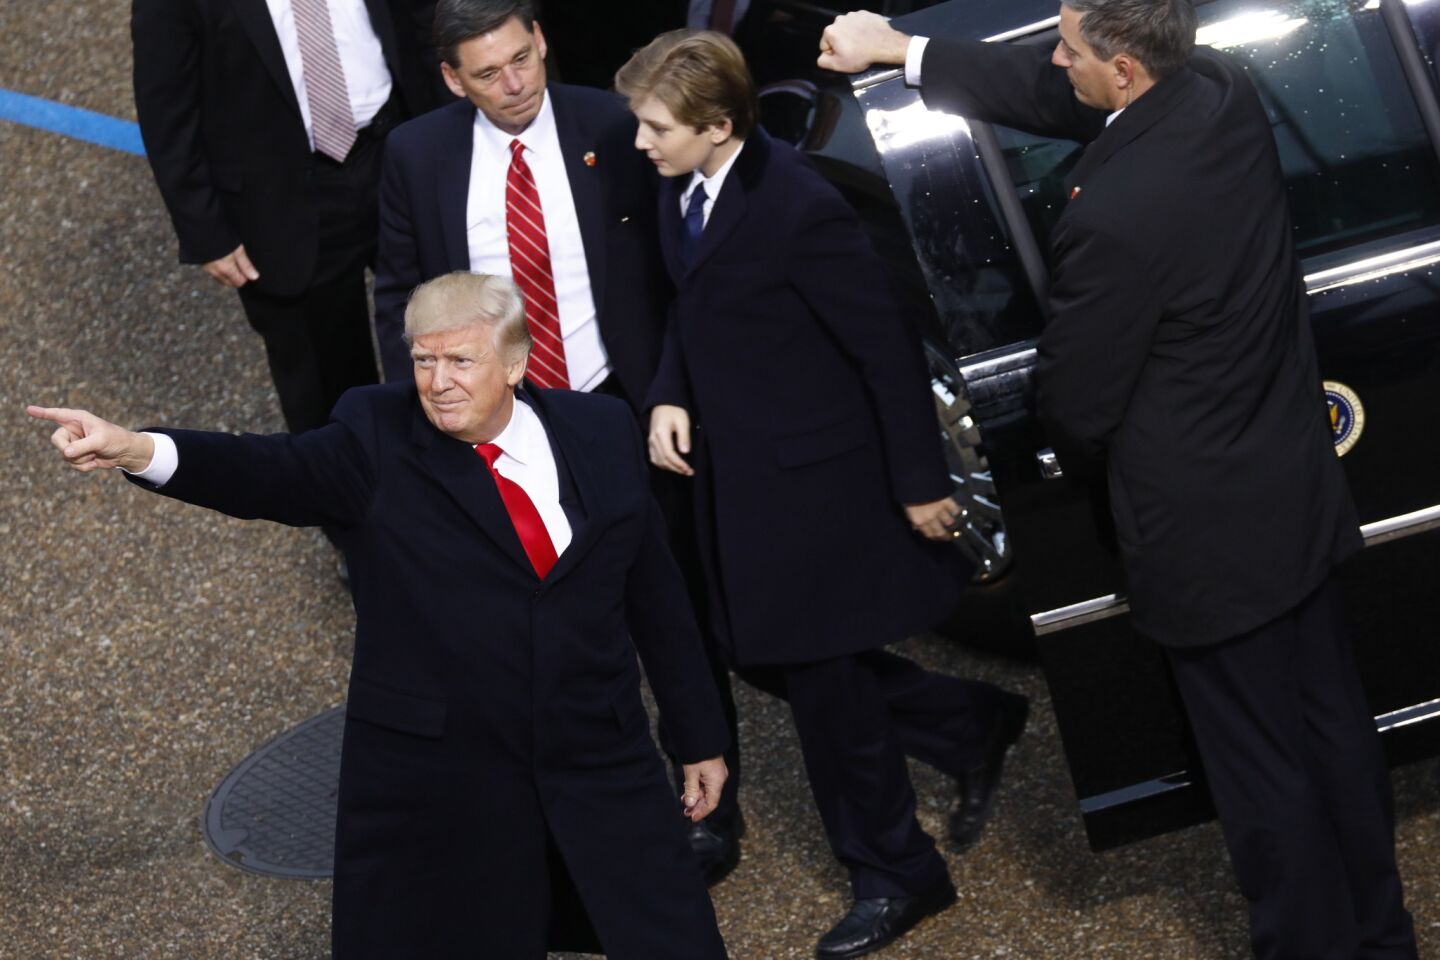 The Inauguration of Donald Trump